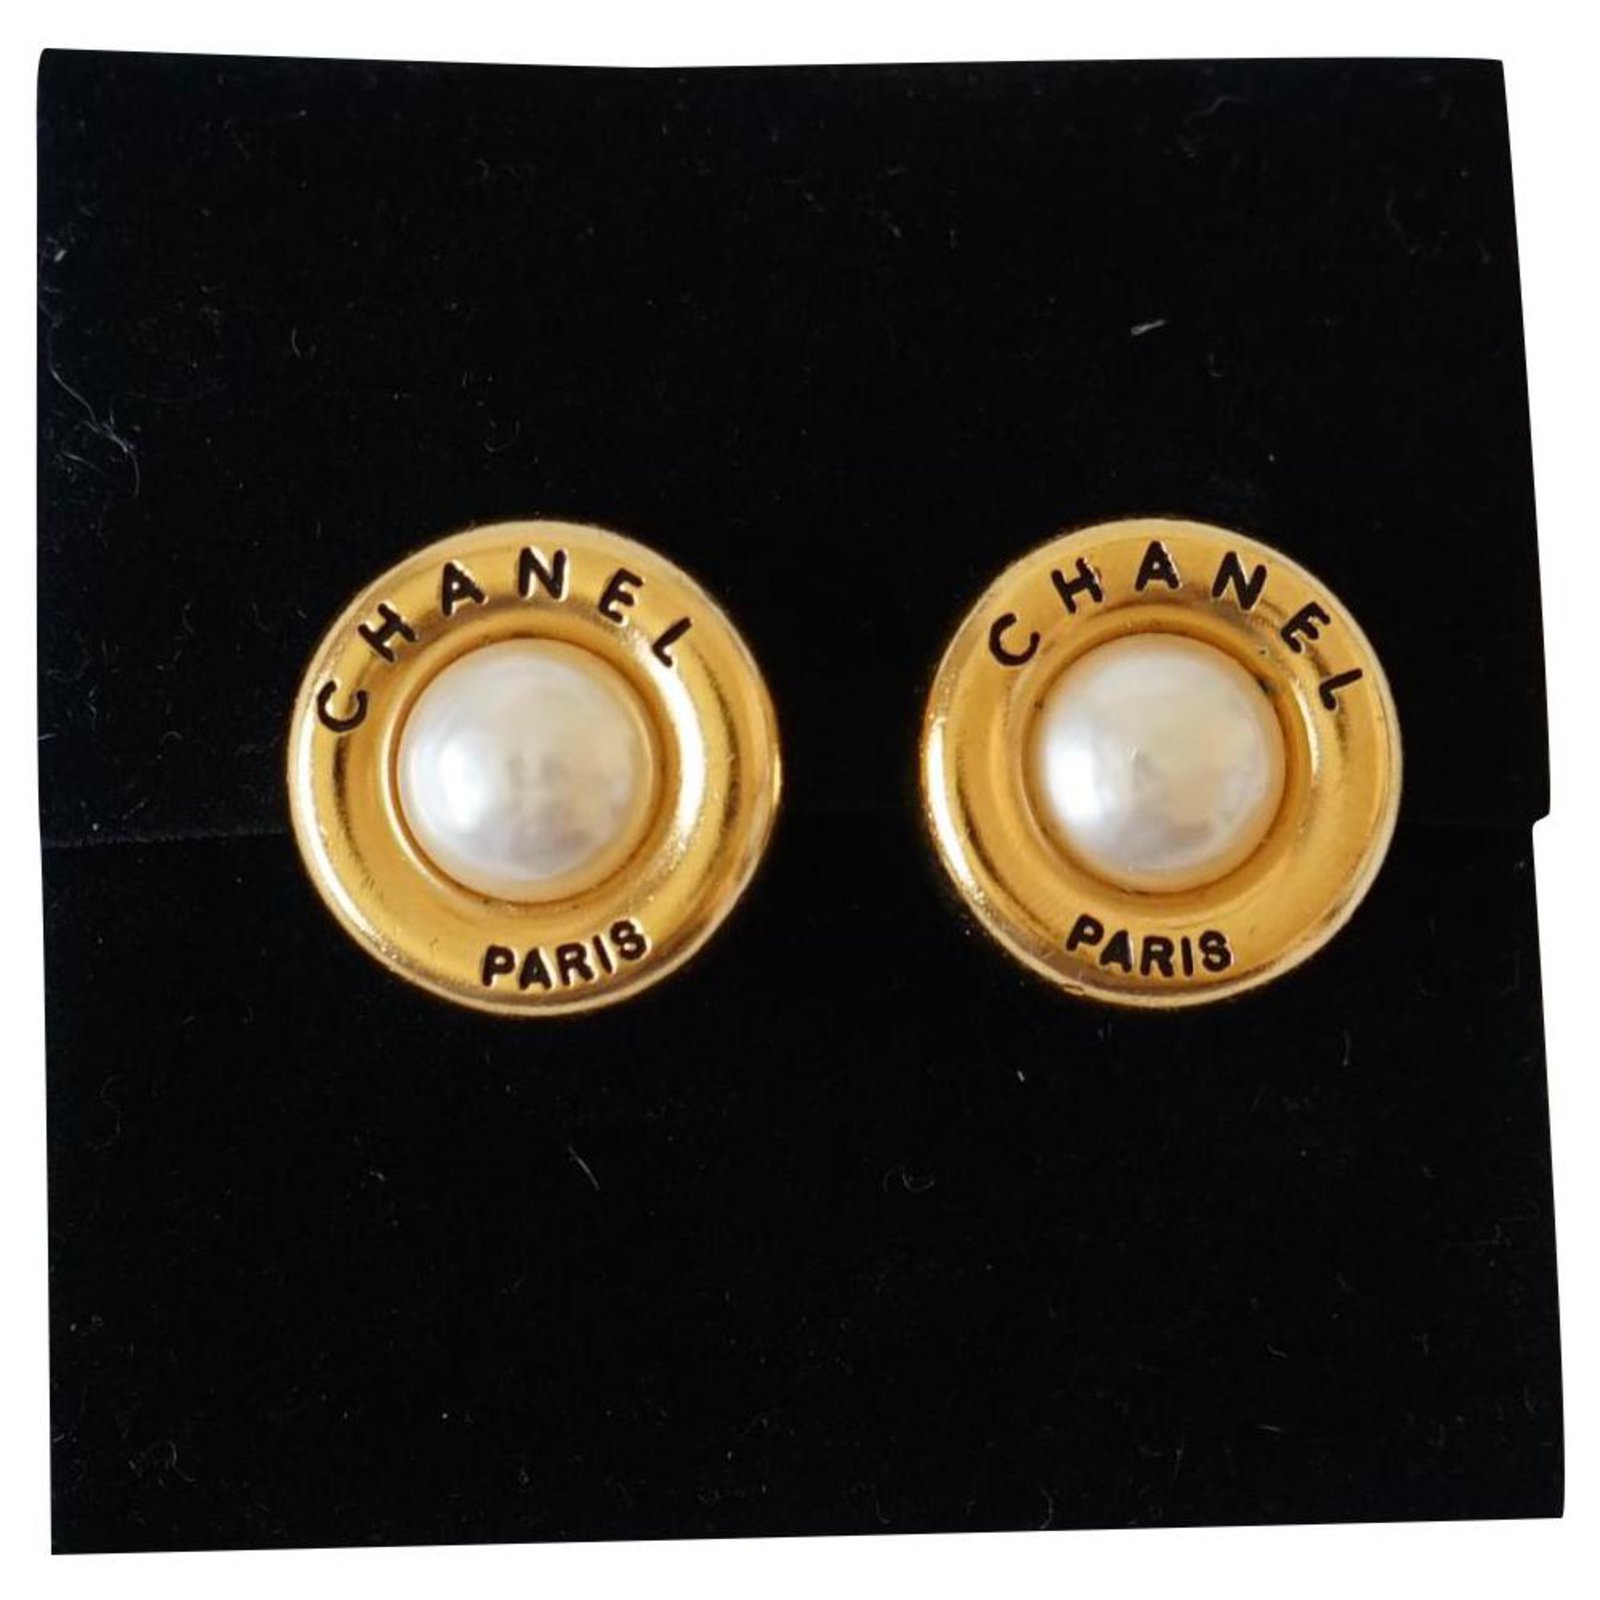 Chanel earrings or gold - Gem